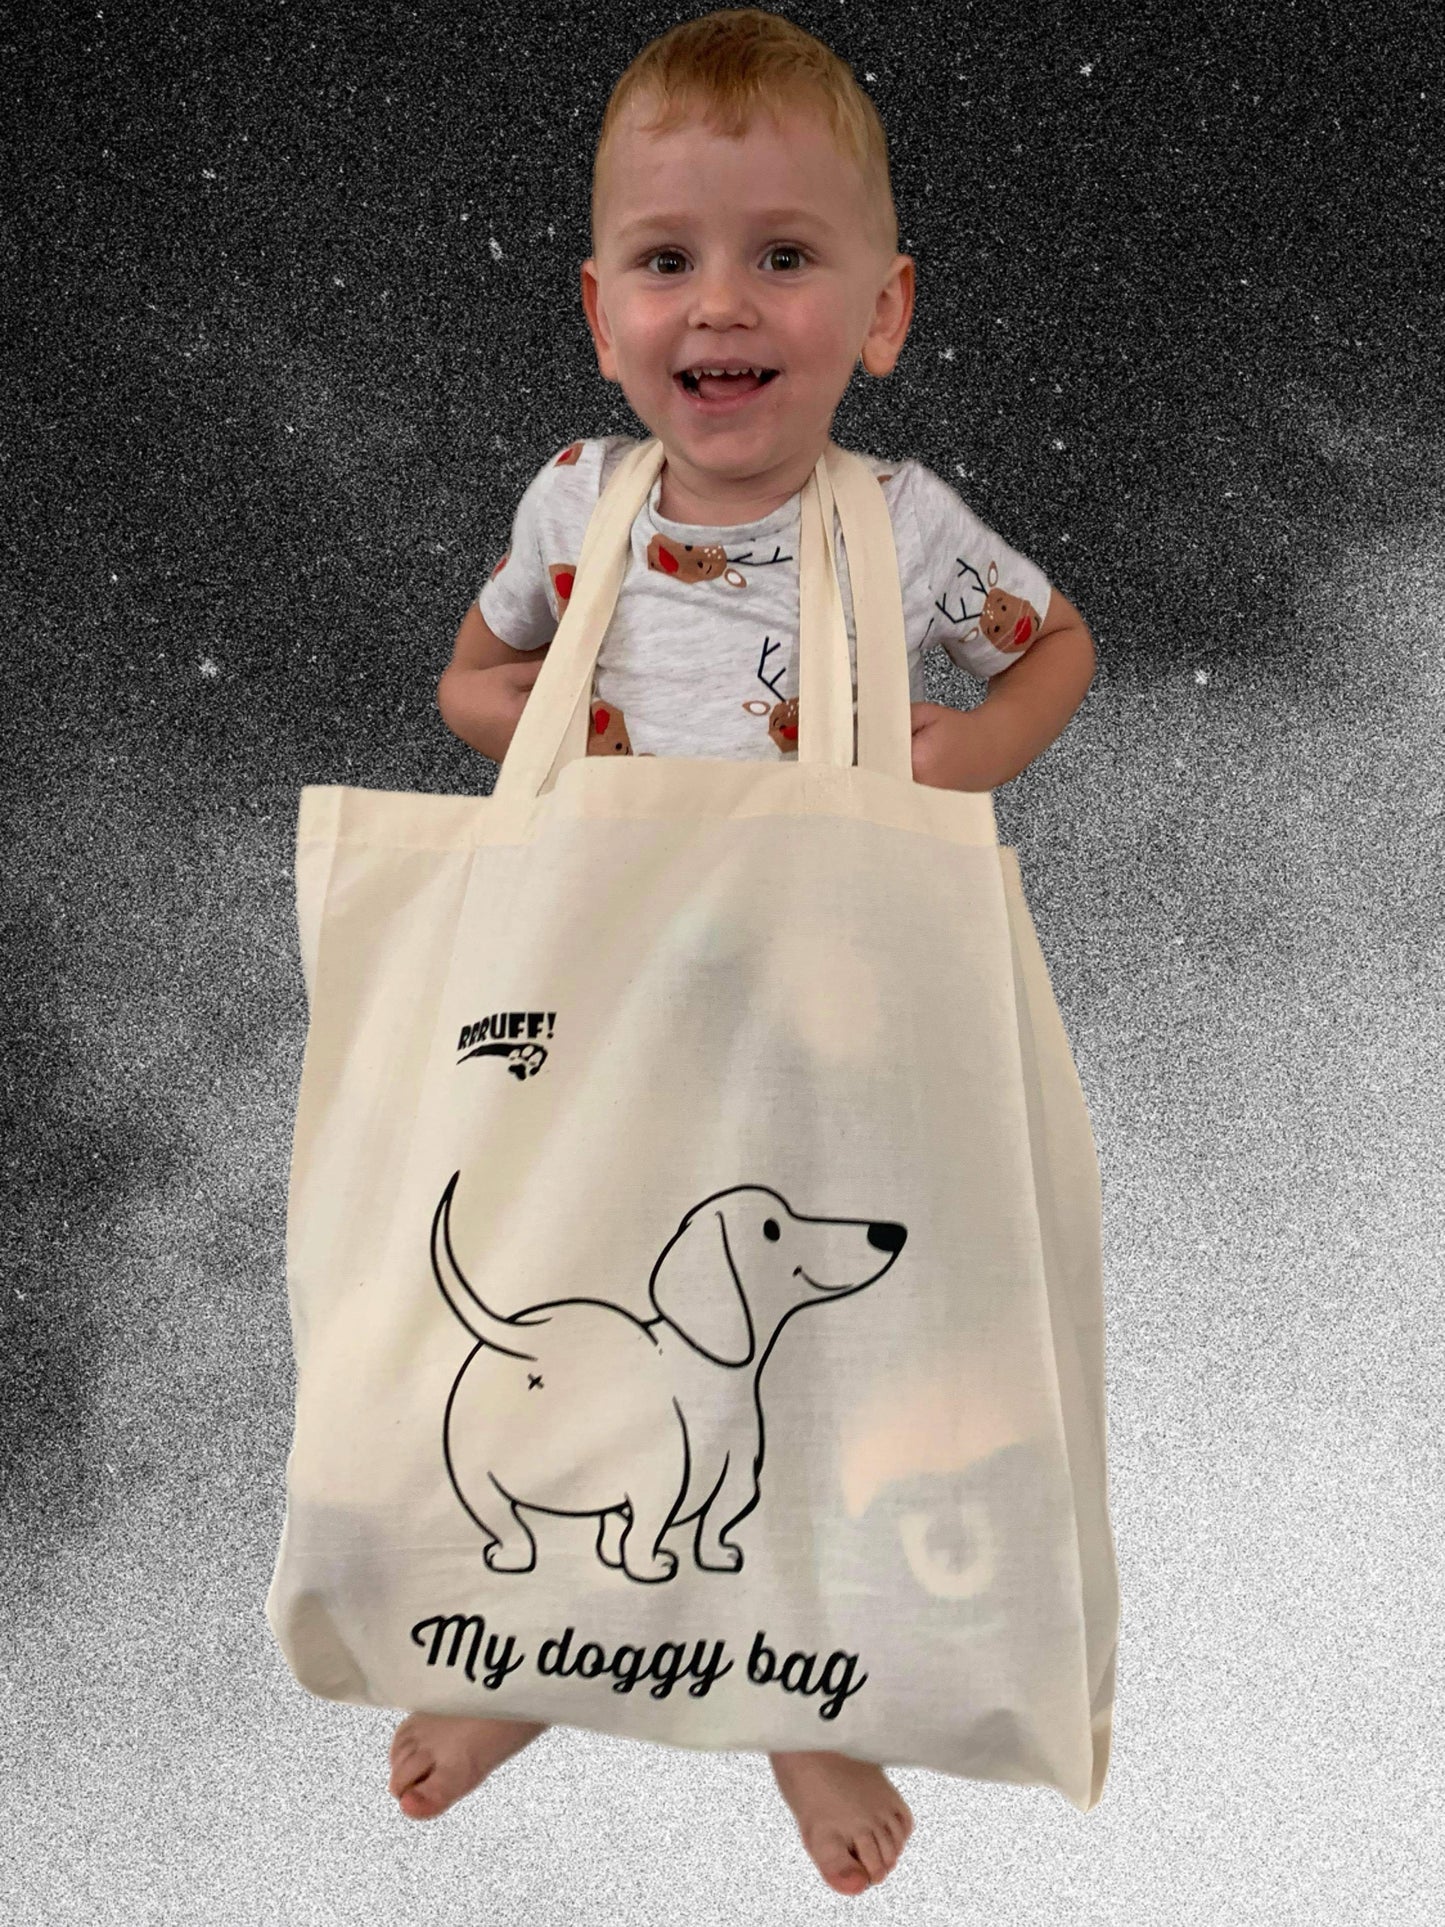 Calico tote bag book bag Christmas gift shopping bag dachshund puppy doggy